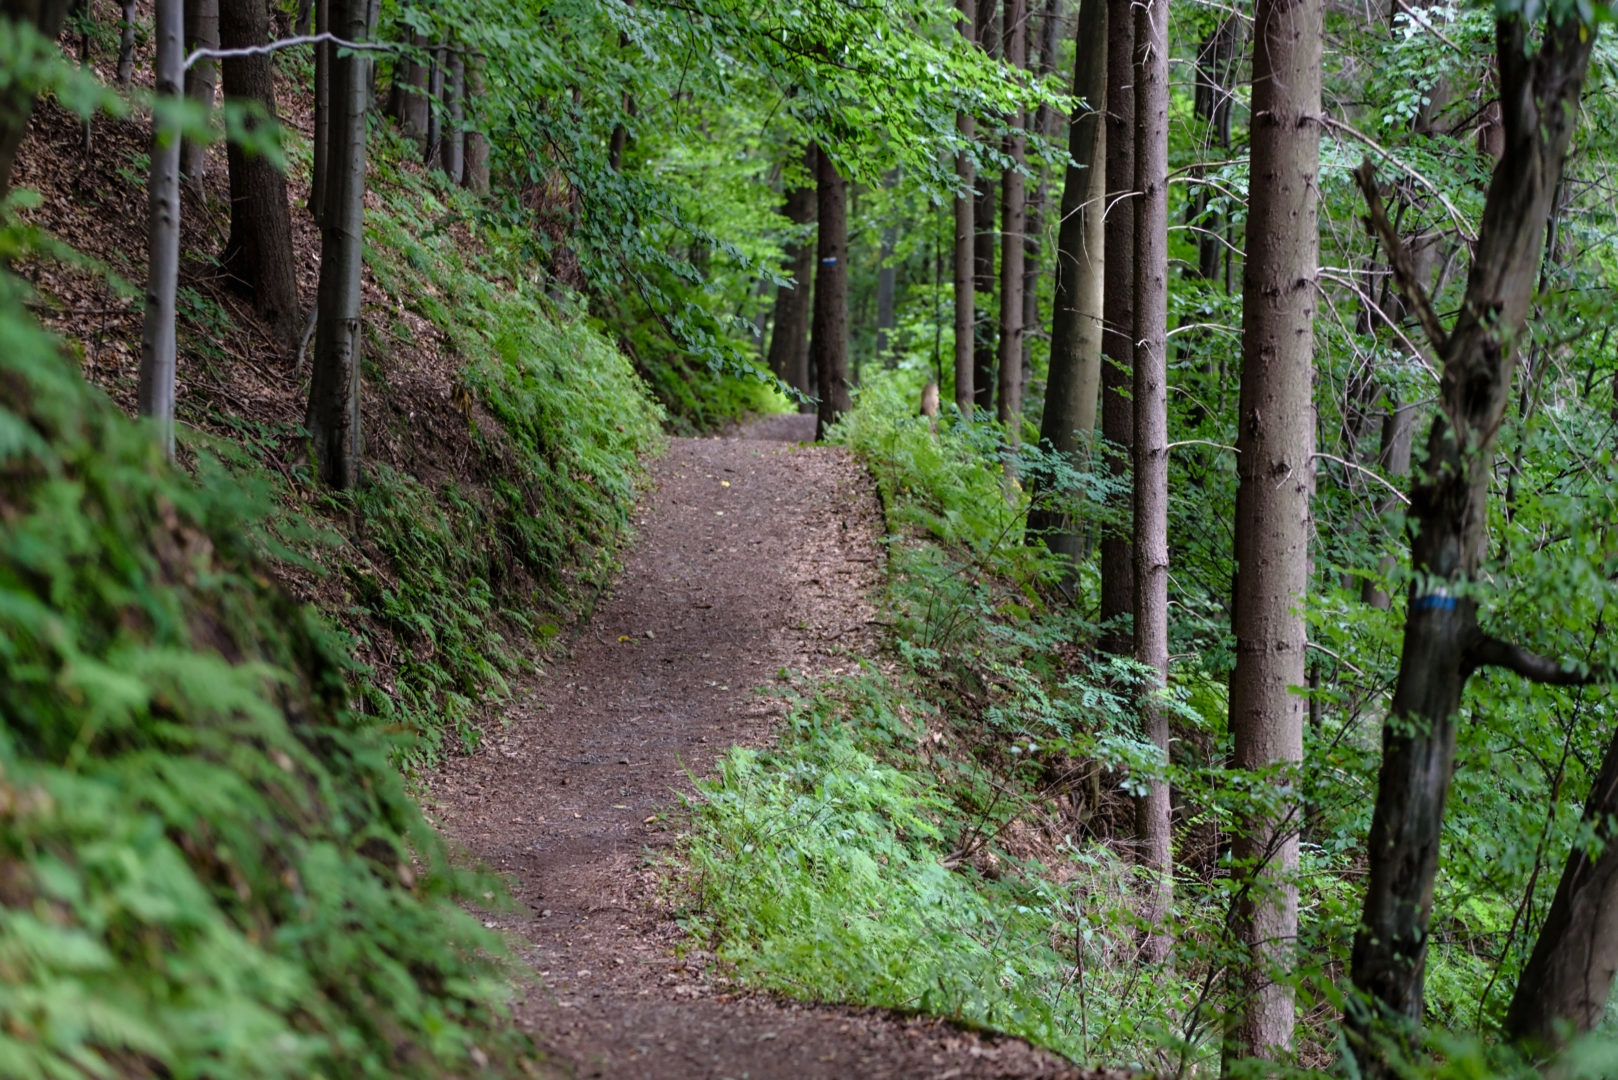 Walking trail in forest